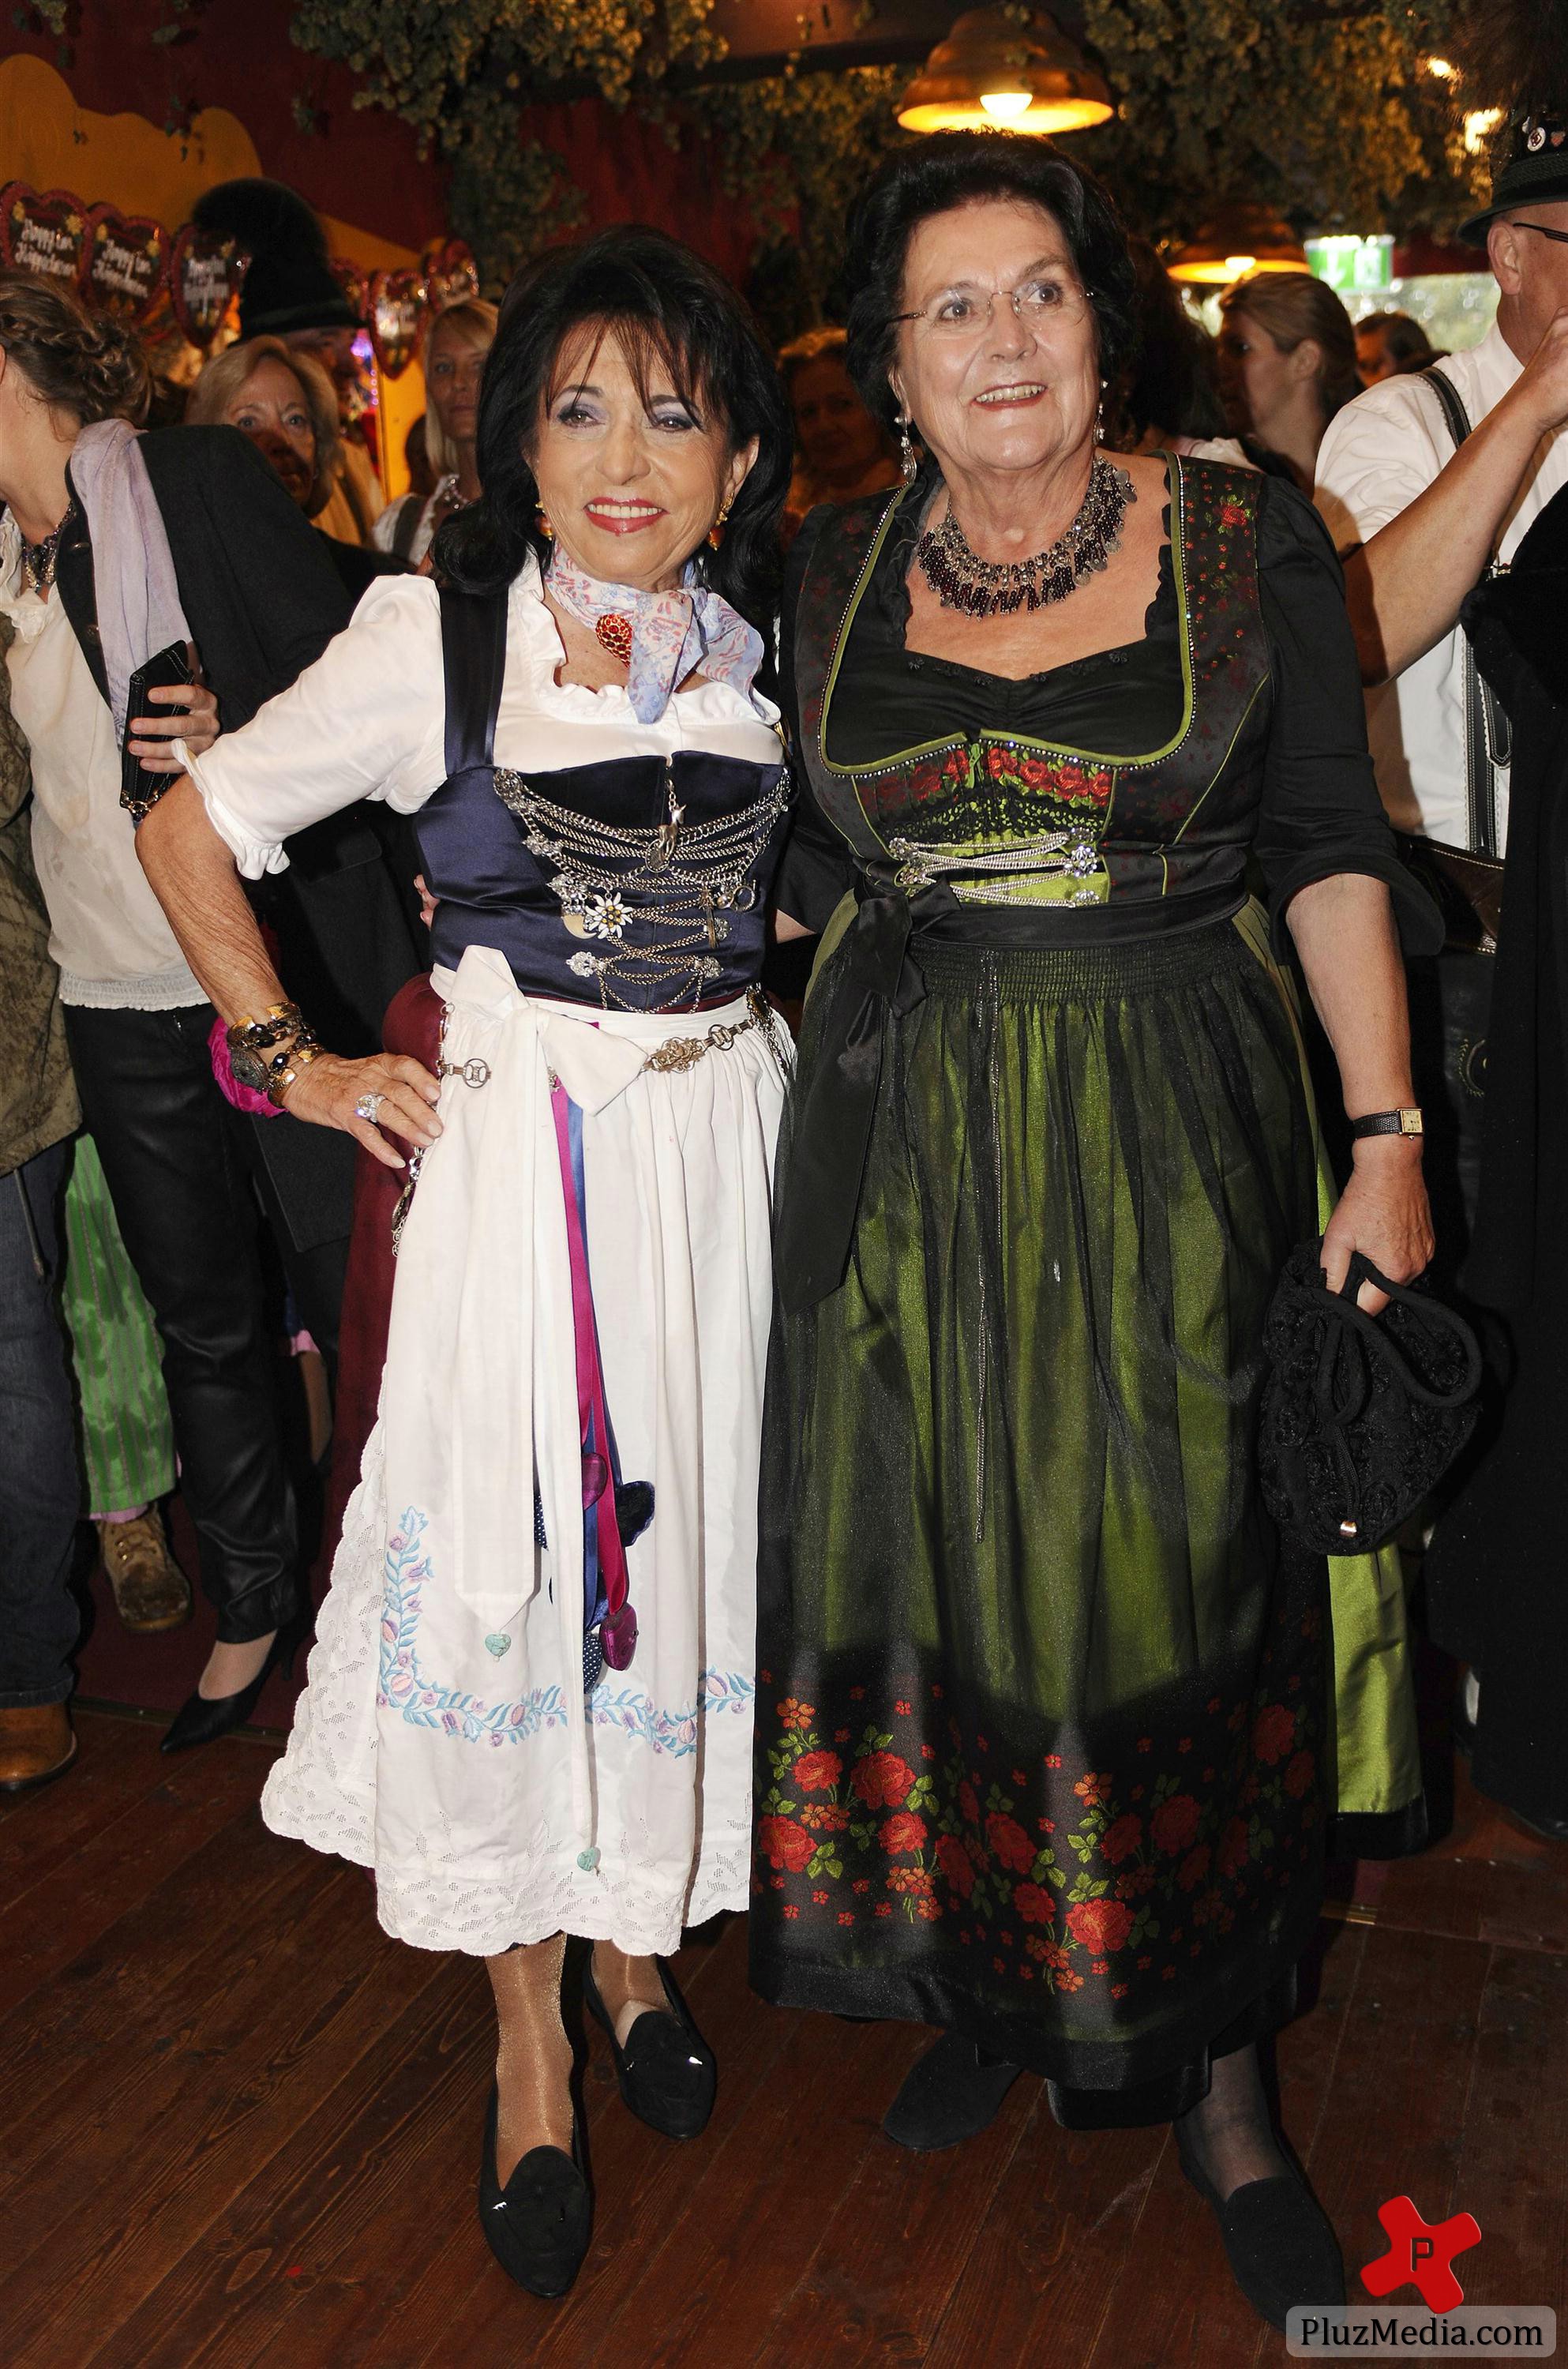 Regine Sixt Damen Wiesn at Hippodrom tent during Oktoberfest photos | Picture 81963